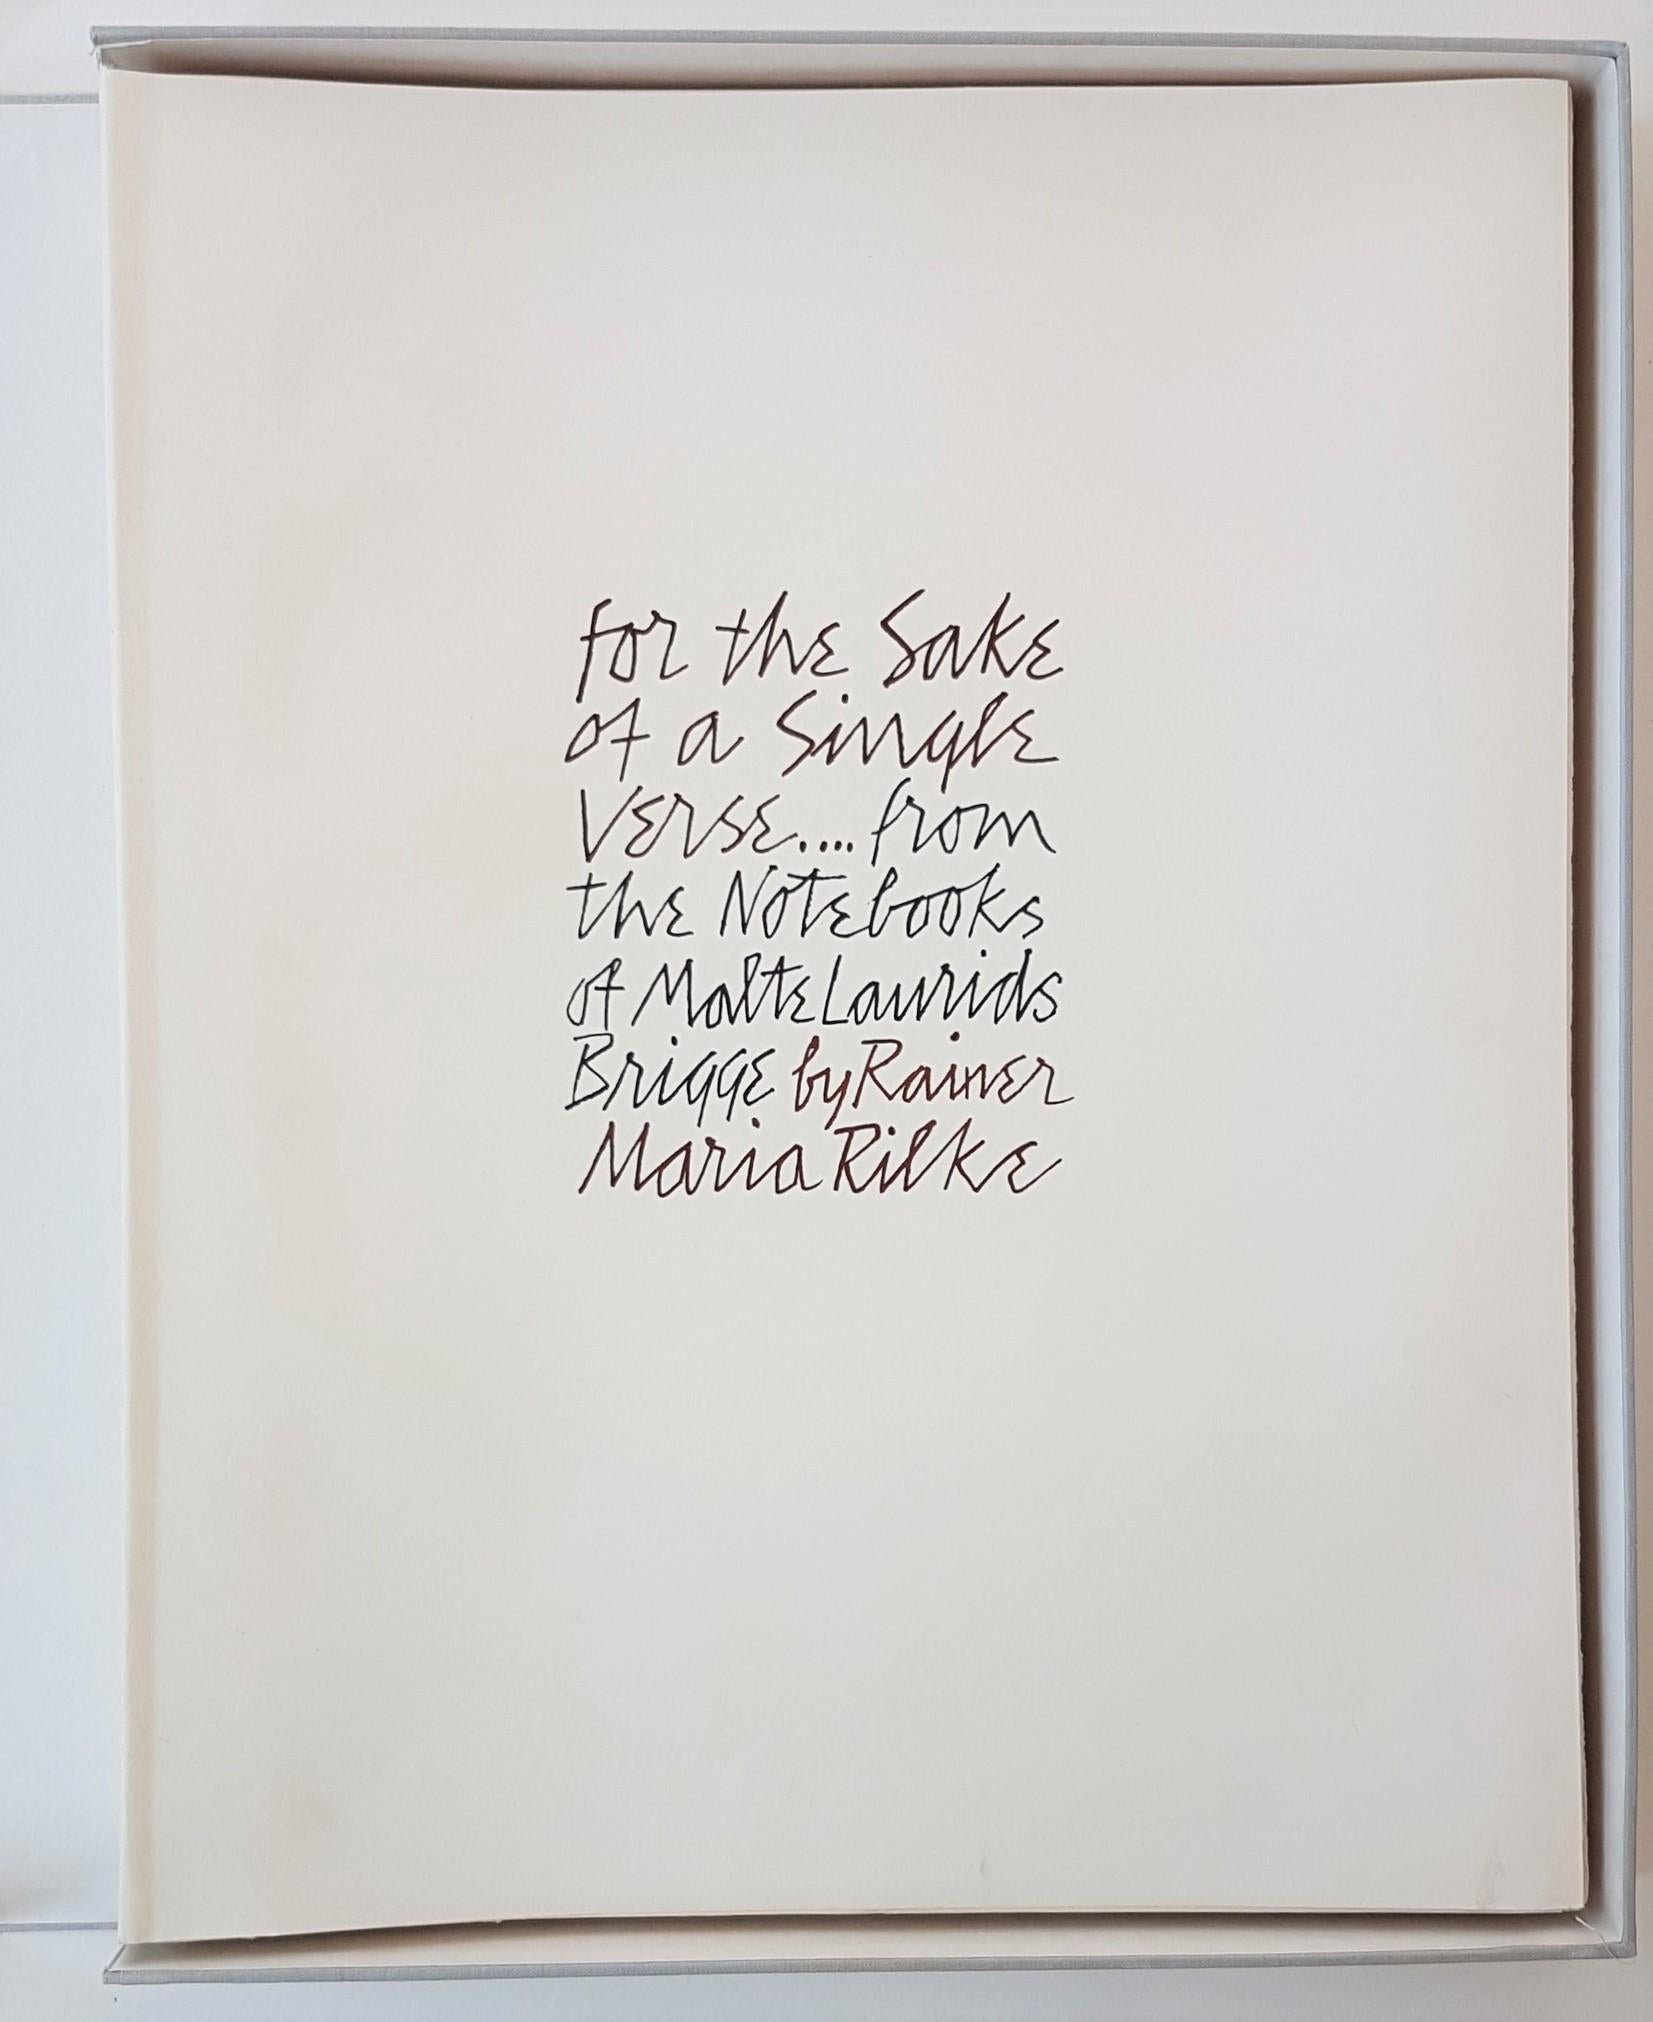 Many Men - For the Sake of A Single Verse by Rainer Maria Rilke - Modern Print by Ben Shahn